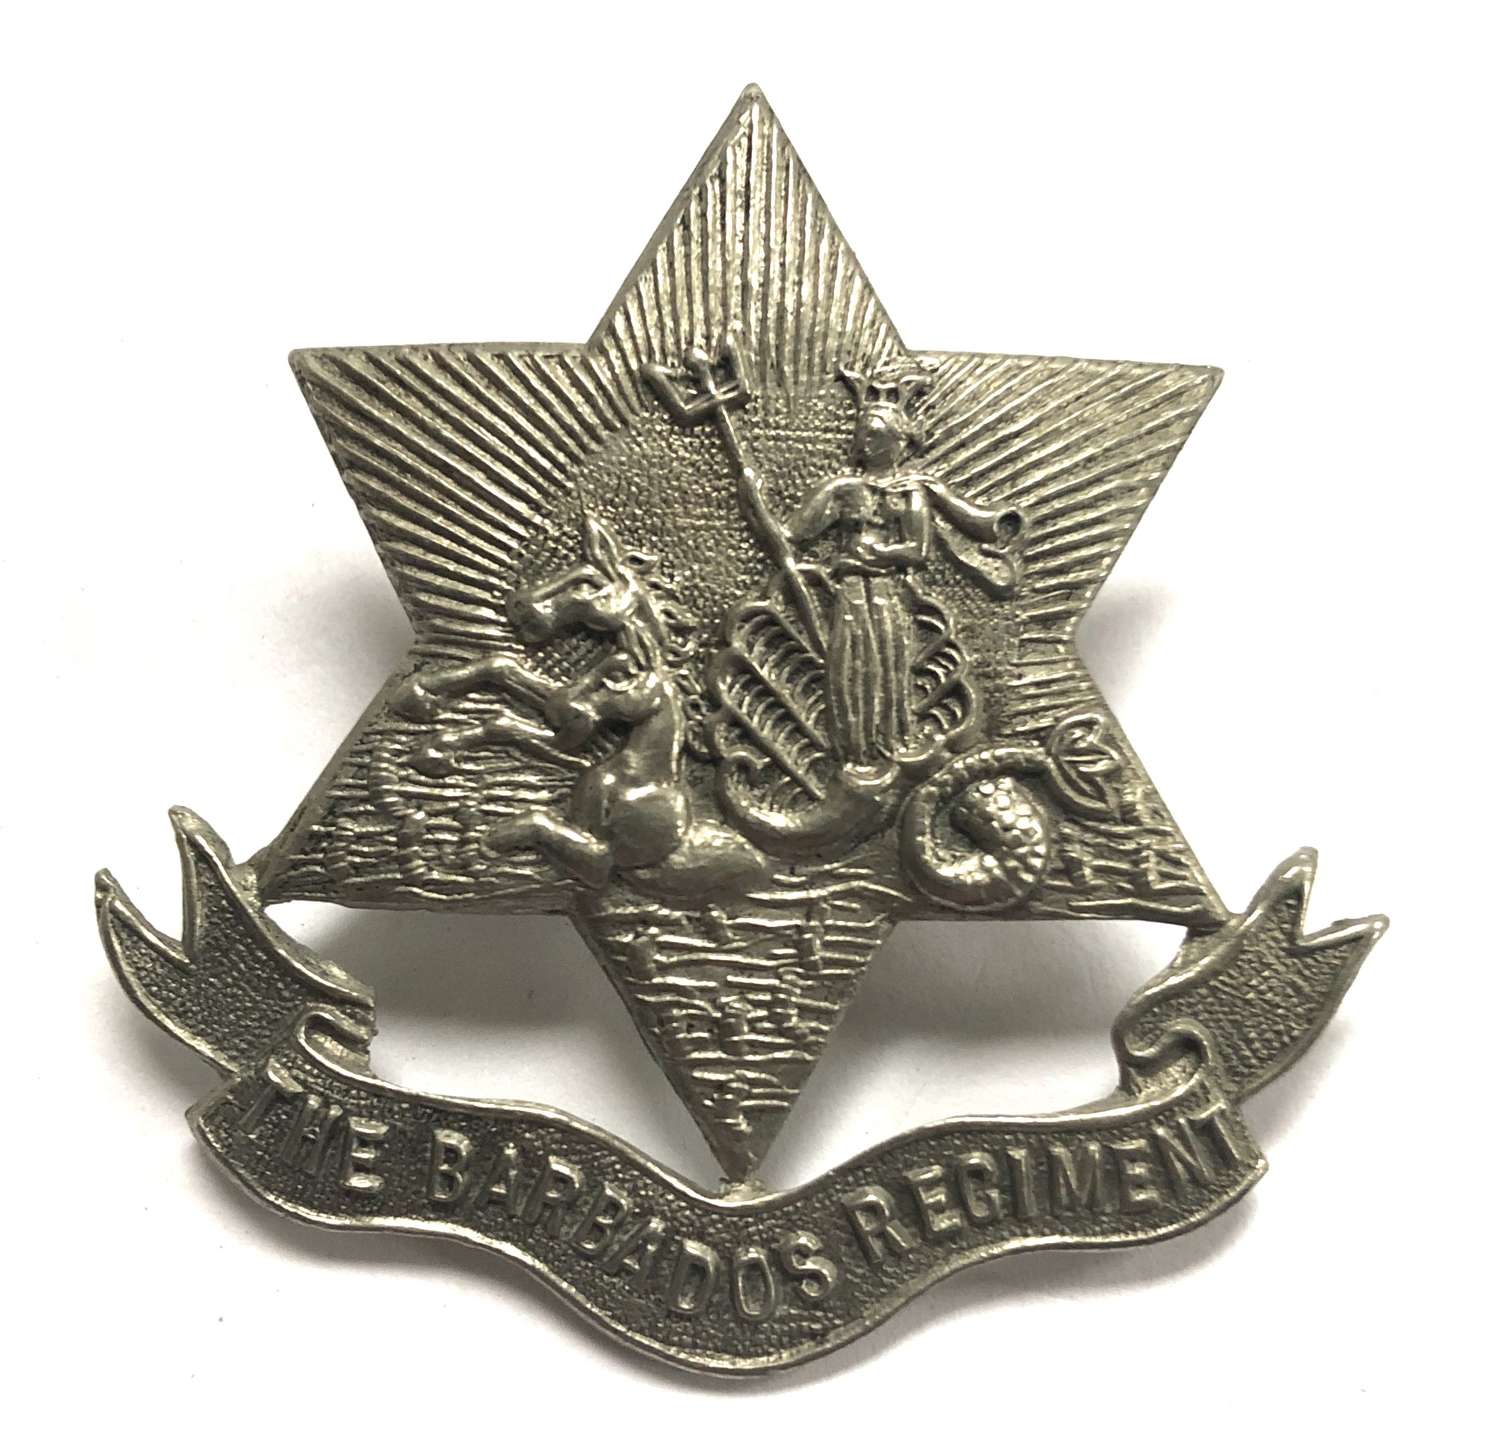 Barbados Regiment post 1948 OR’s badge